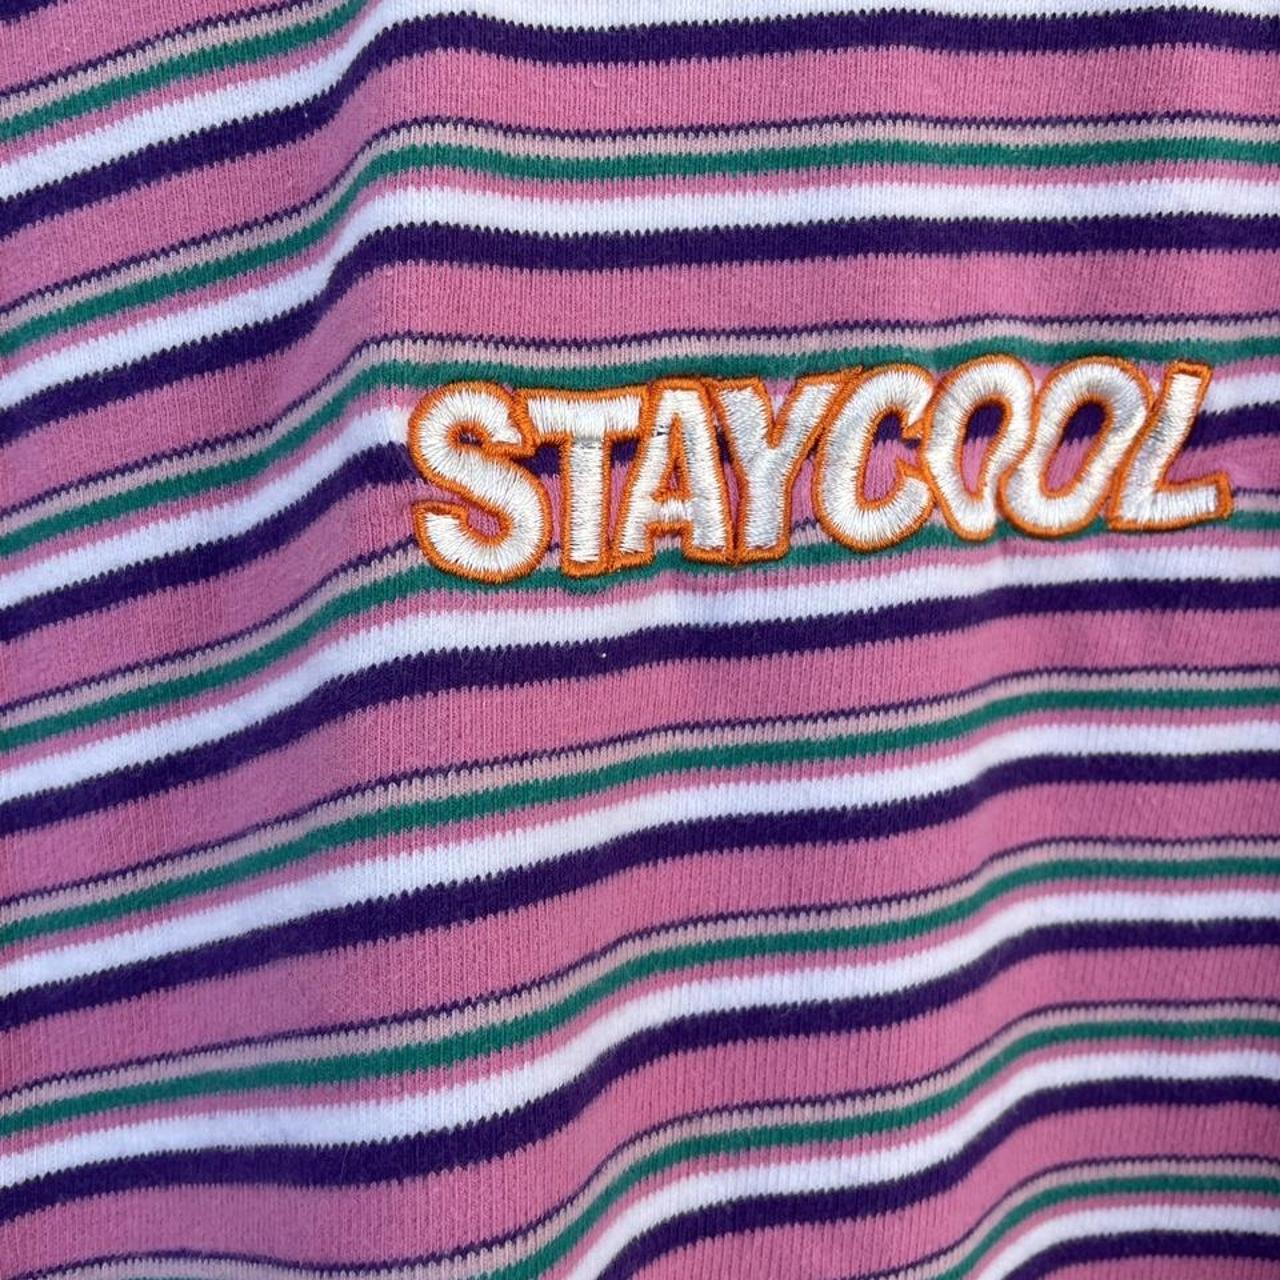 STAY COOL NYC Men's Pink T-shirt | Depop